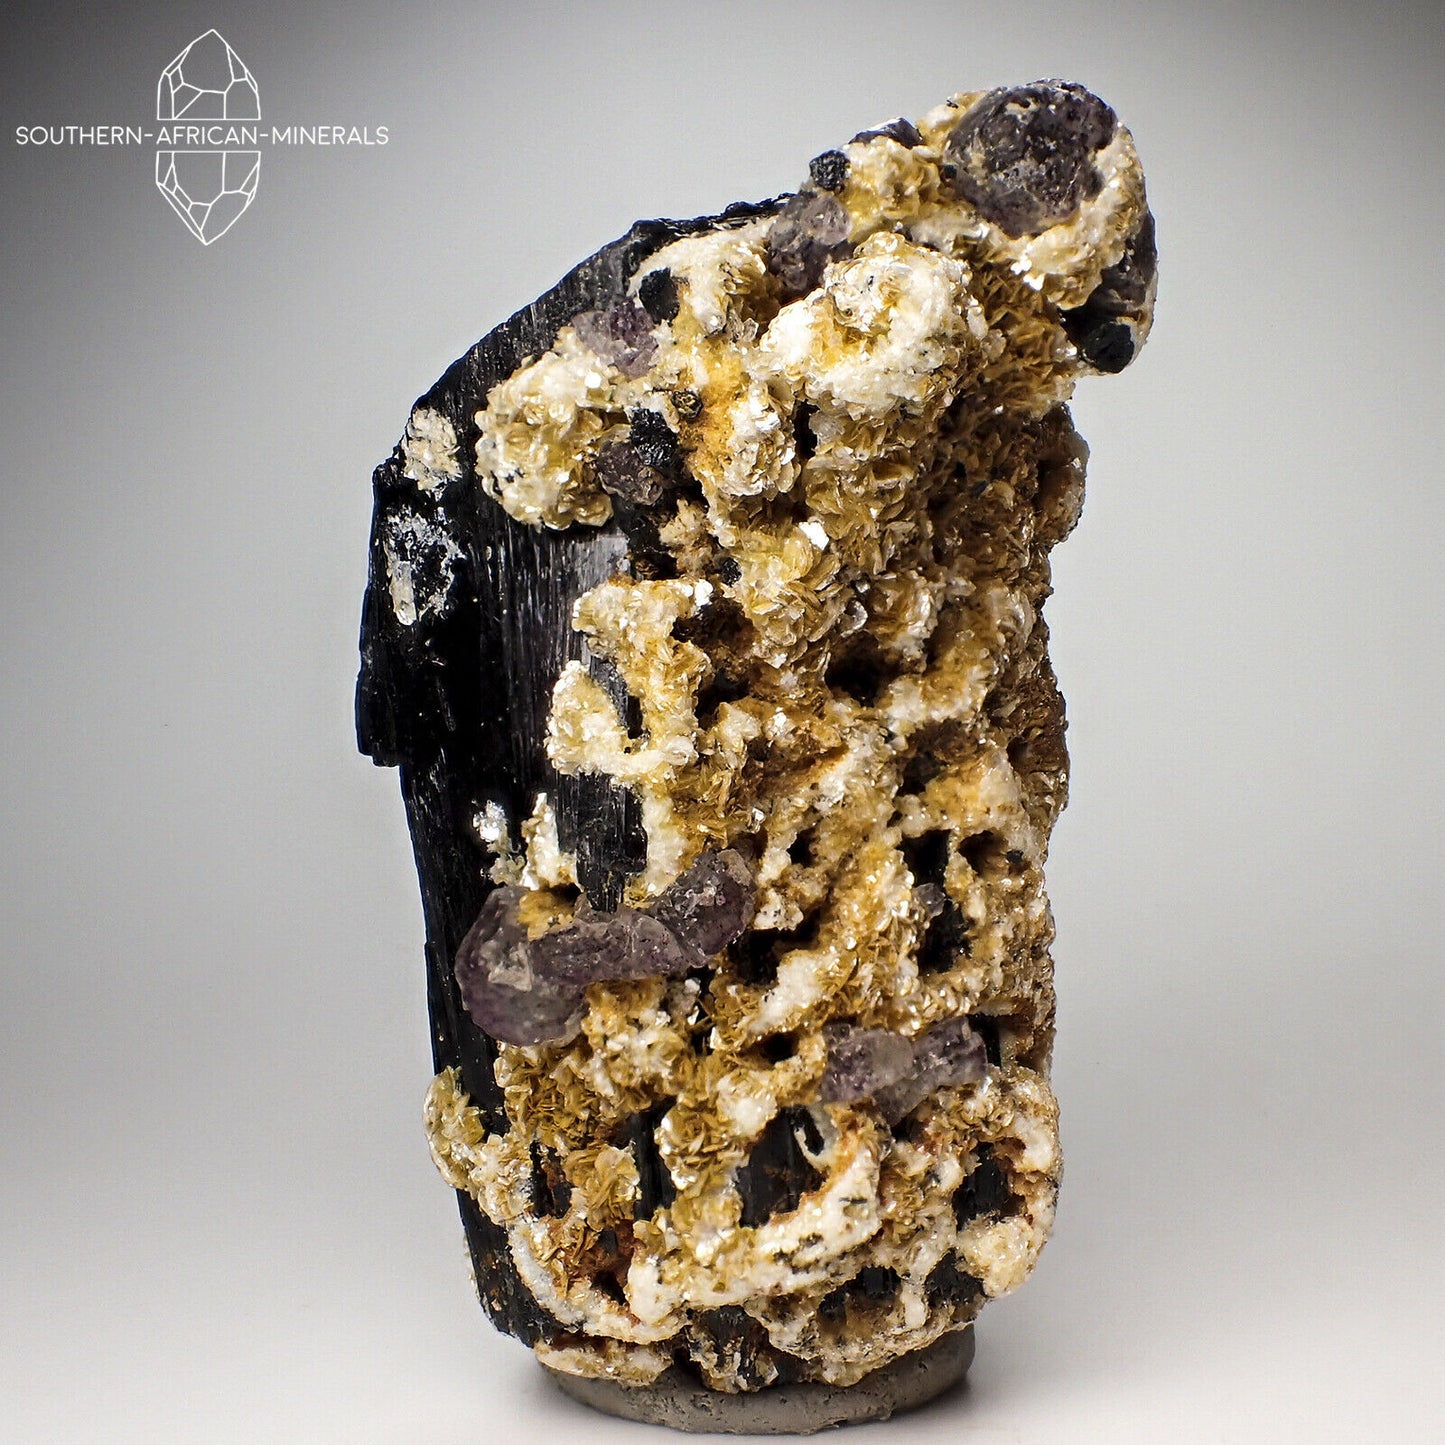 Black Tourmaline with Mica and Fluorite Crystal Specimen, Erongo, Namibia